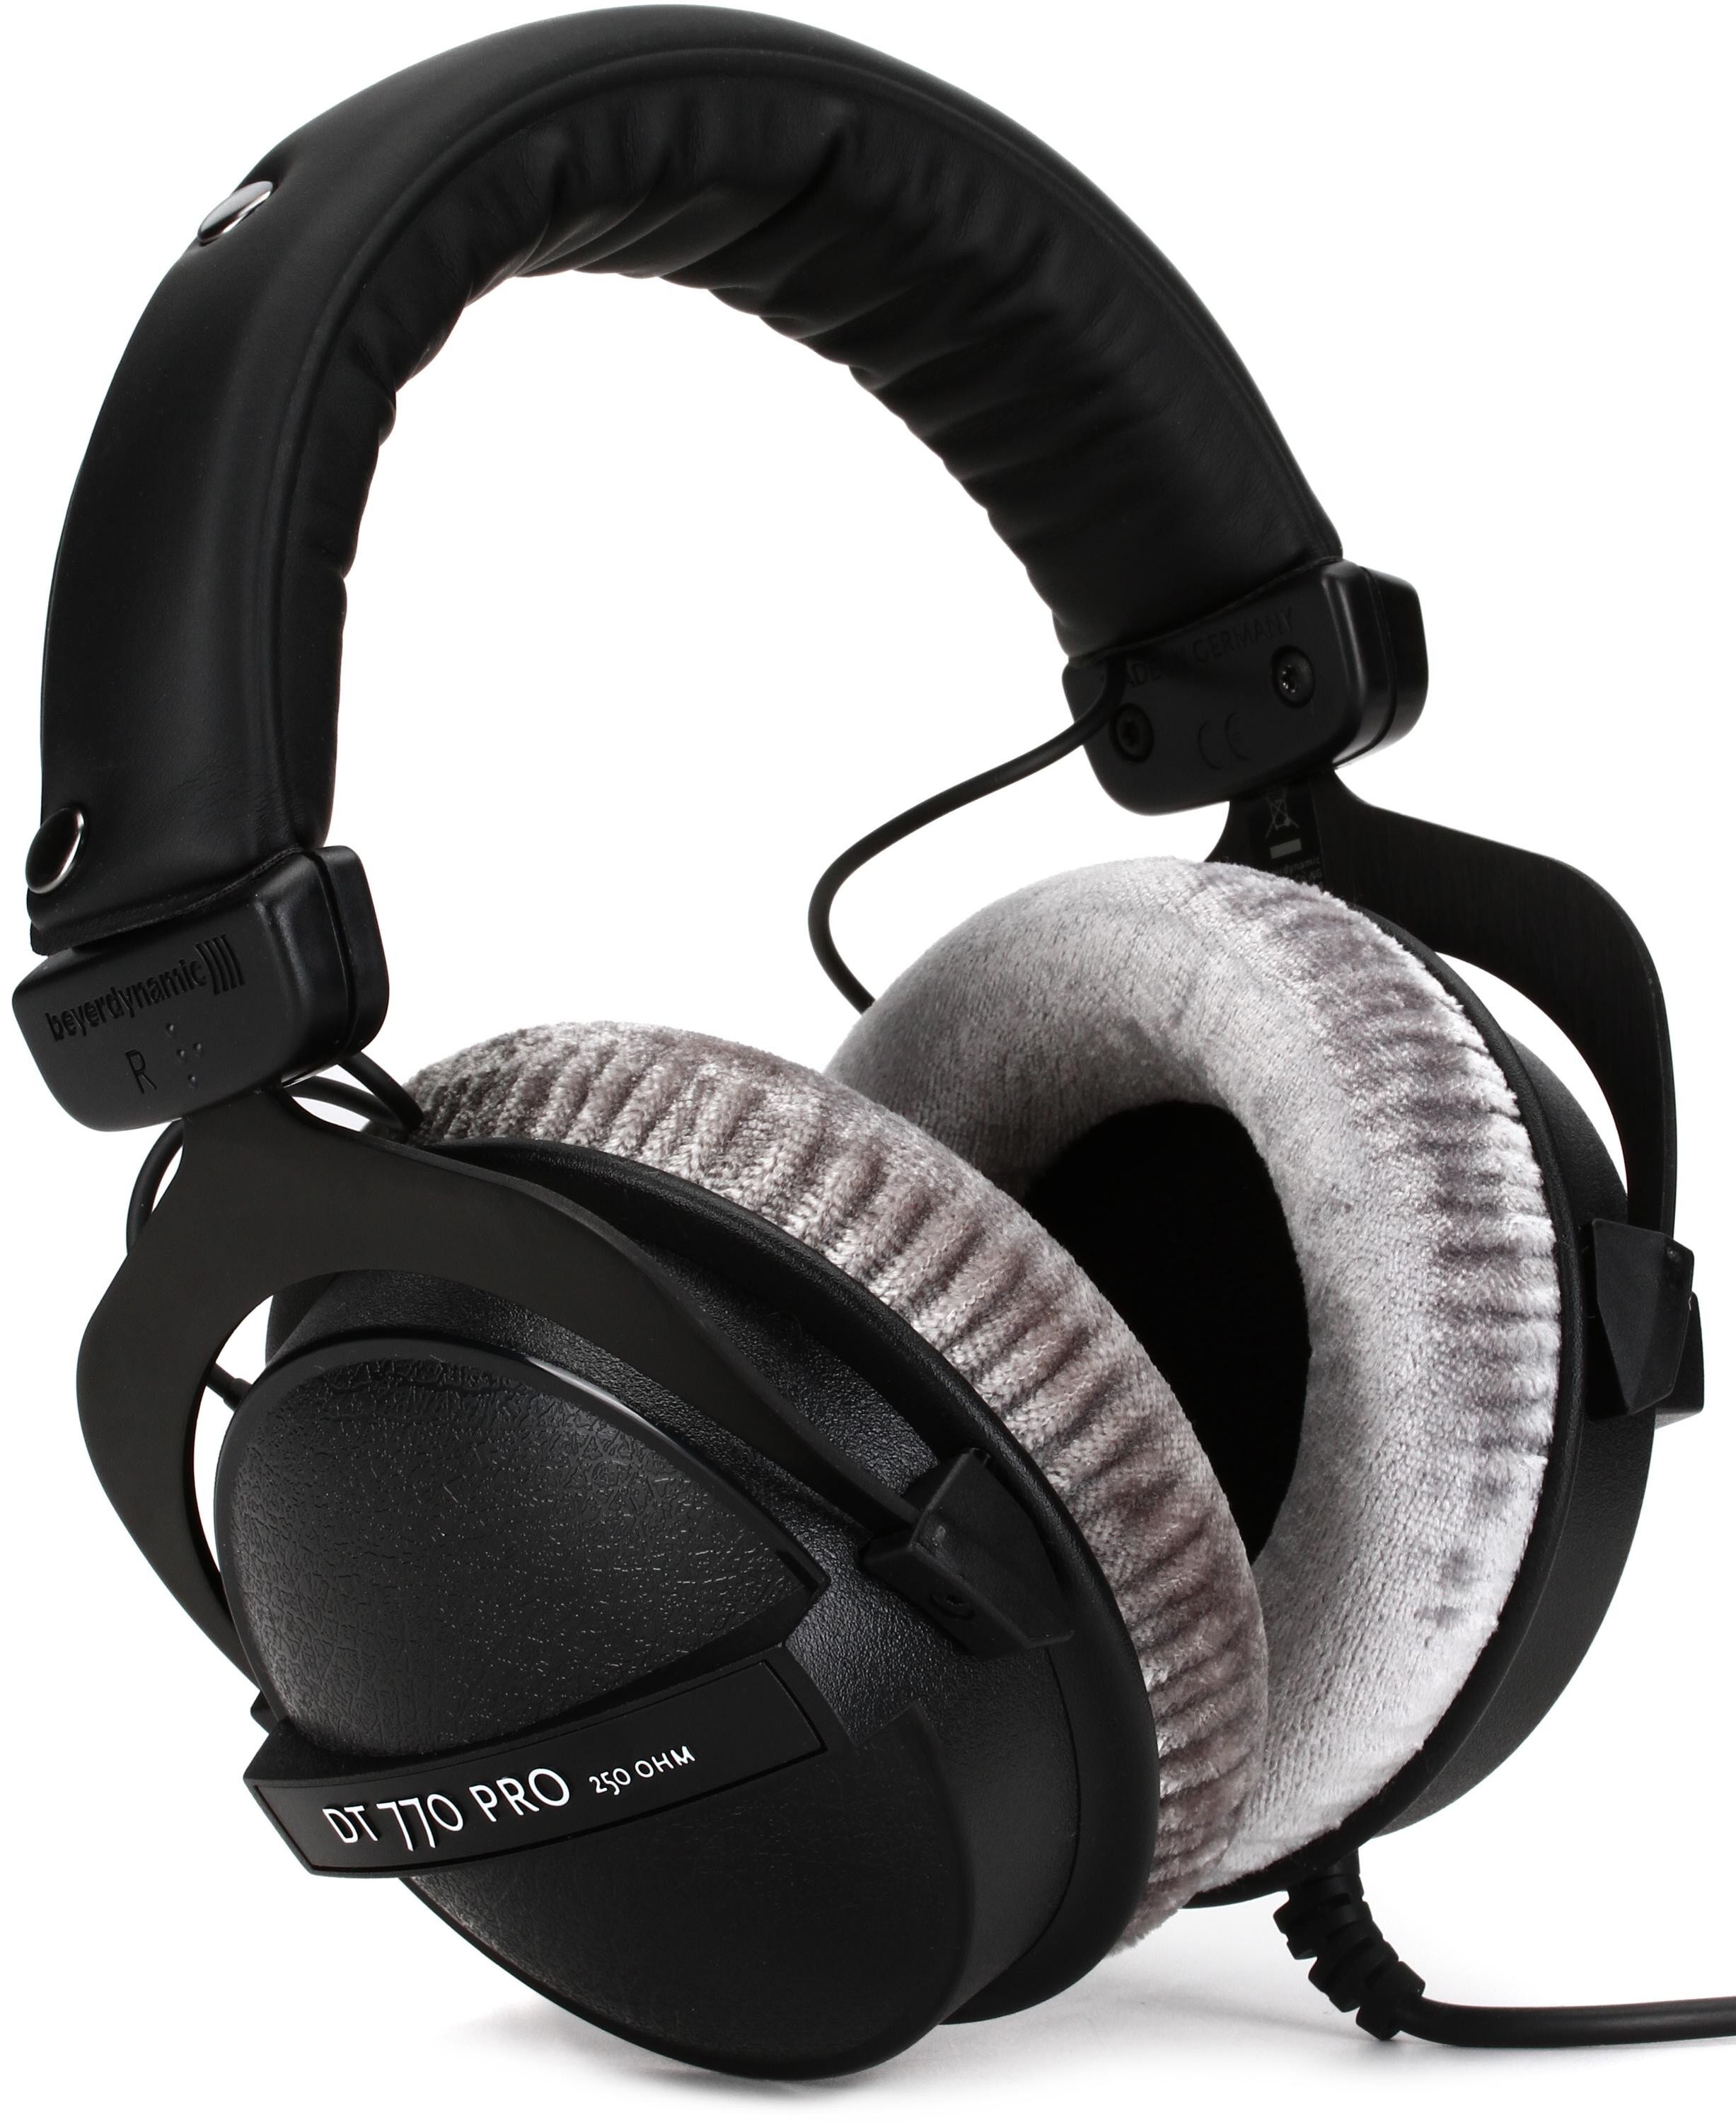 Beyerdynamic DT 770 Pro 250 ohm Closed-back Studio Mixing Headphones ...